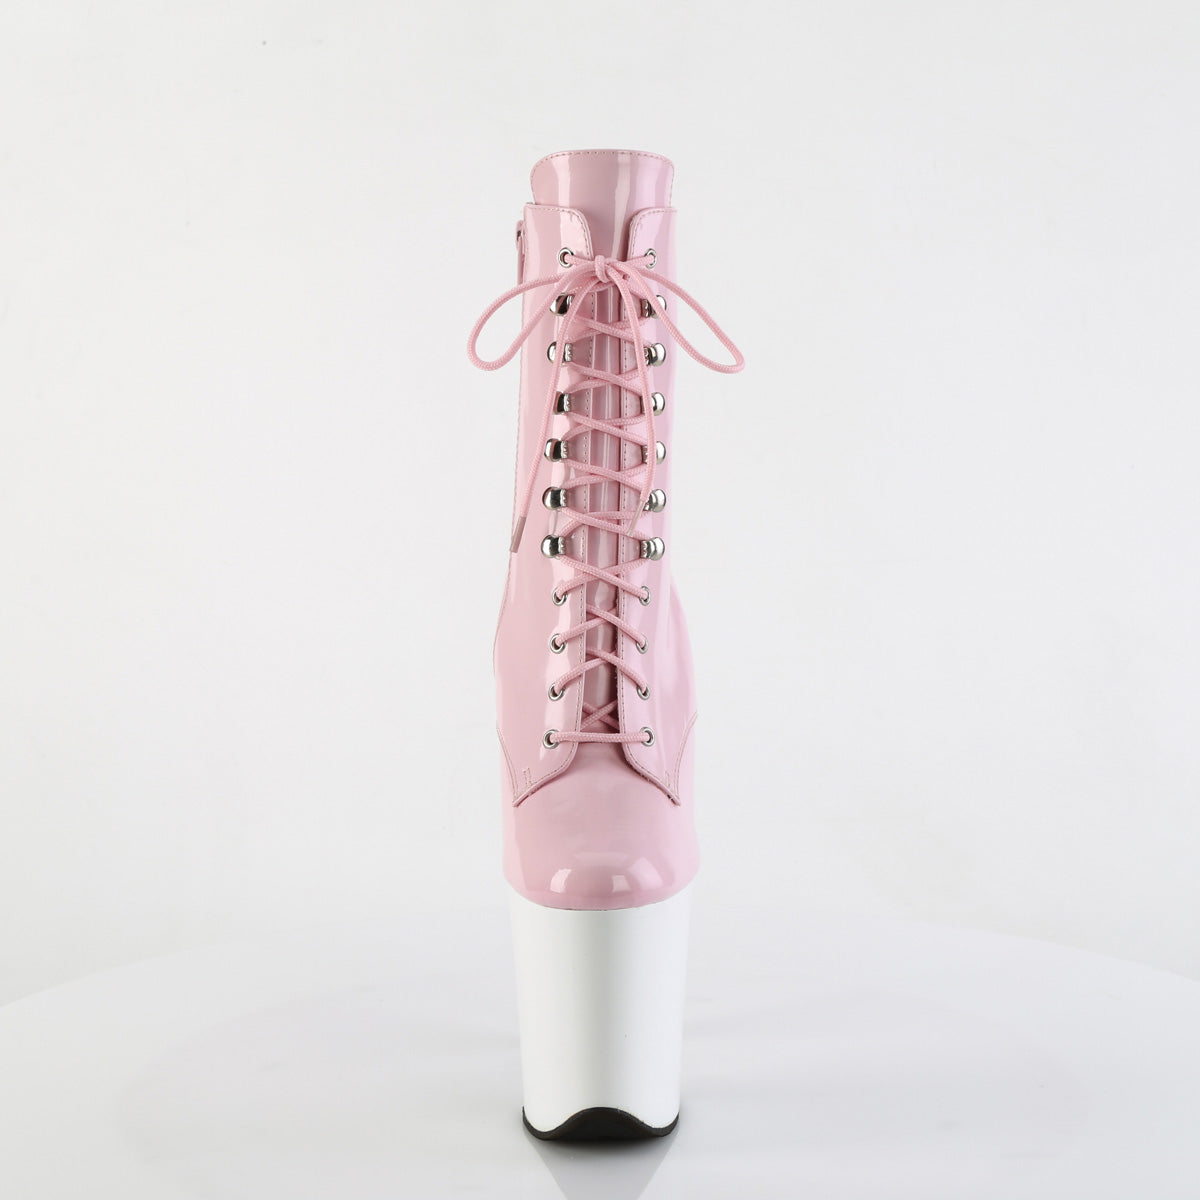 FLAMINGO-1020 Pink & White Calf High Boots